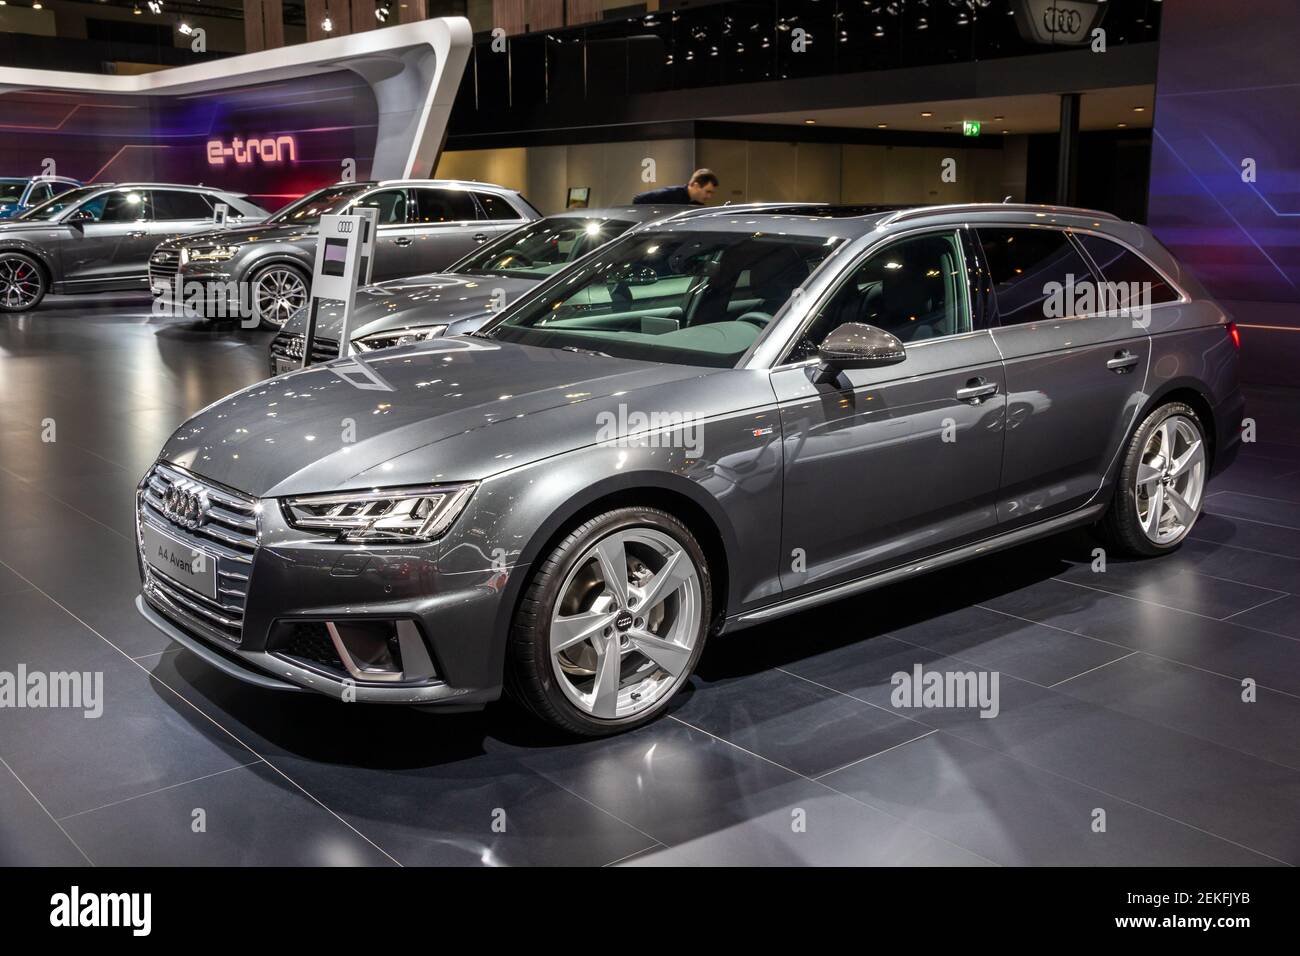 Audi A4 Avant car showcased at the Brussels Autosalon Motor Show. Belgium - January 18, 2019. Stock Photo